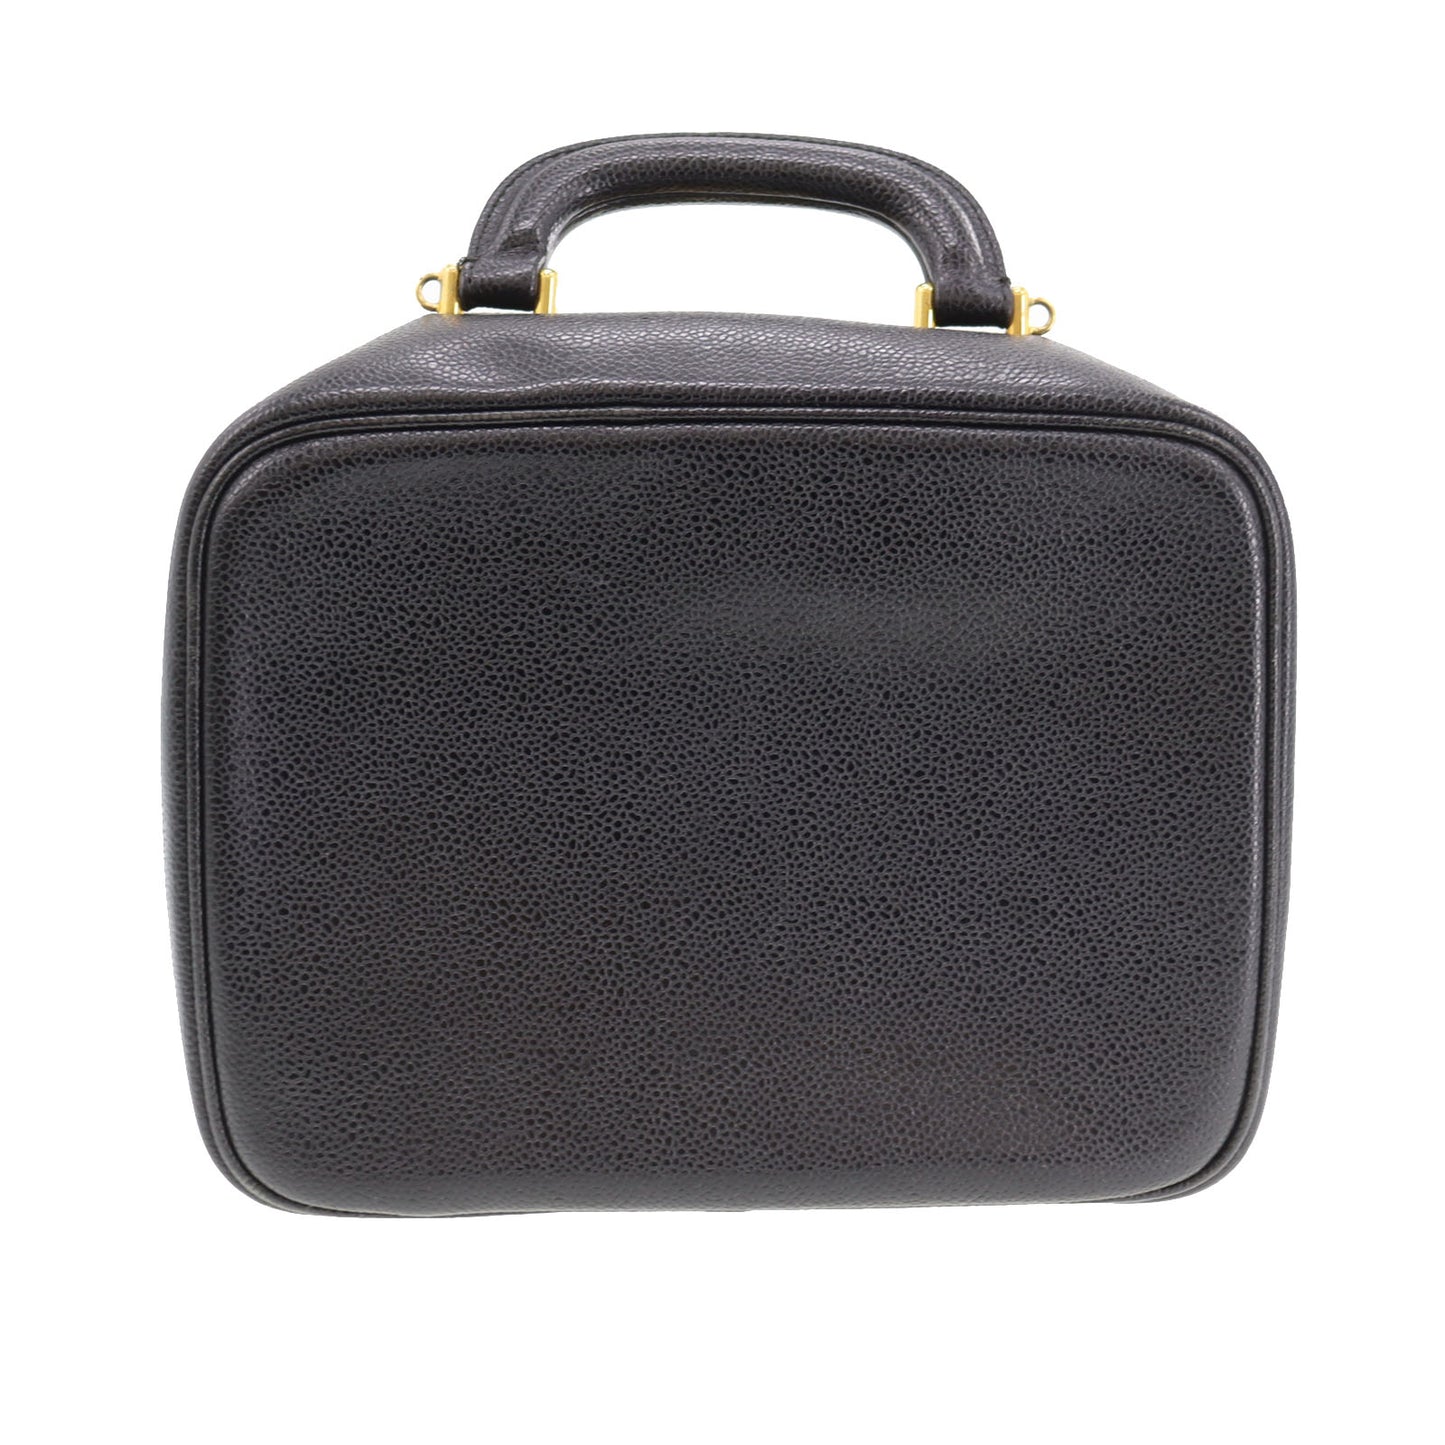 CHANEL CC Shoulder Handbag Vanity Black Caviar Skin Leather #CD668